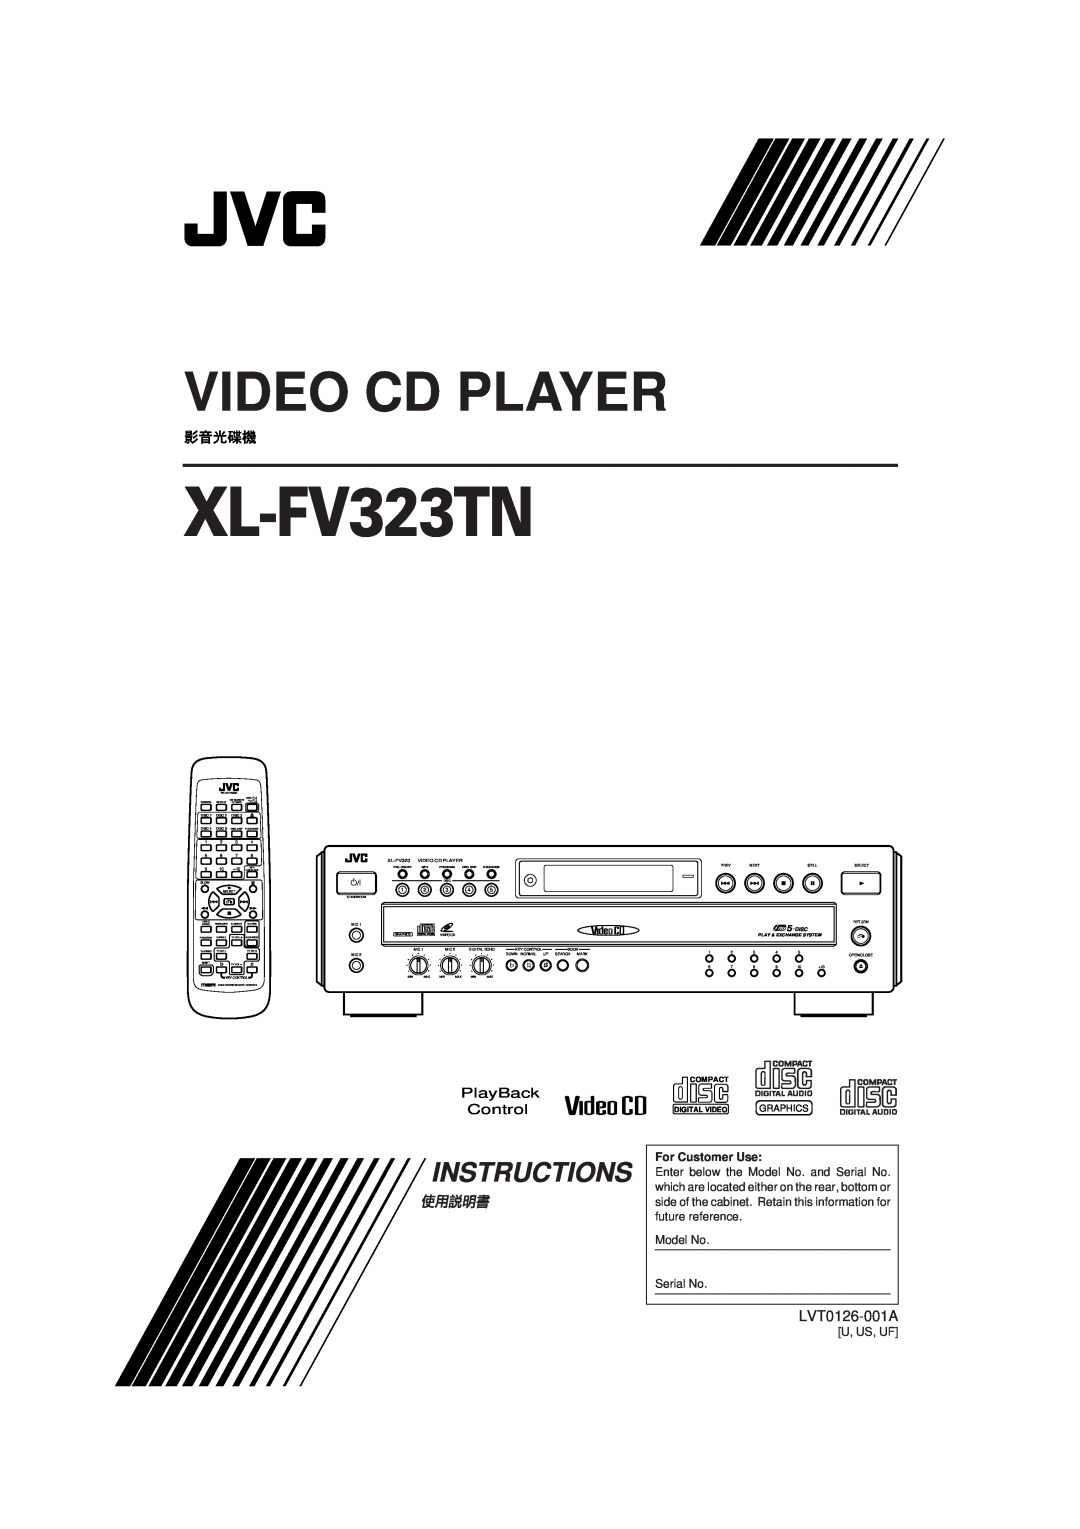 JVC XL-FV323TN manual LVT0126-001A, Video Cd Player, Instructions, Graphics, Digital Video, Compact, Disc 